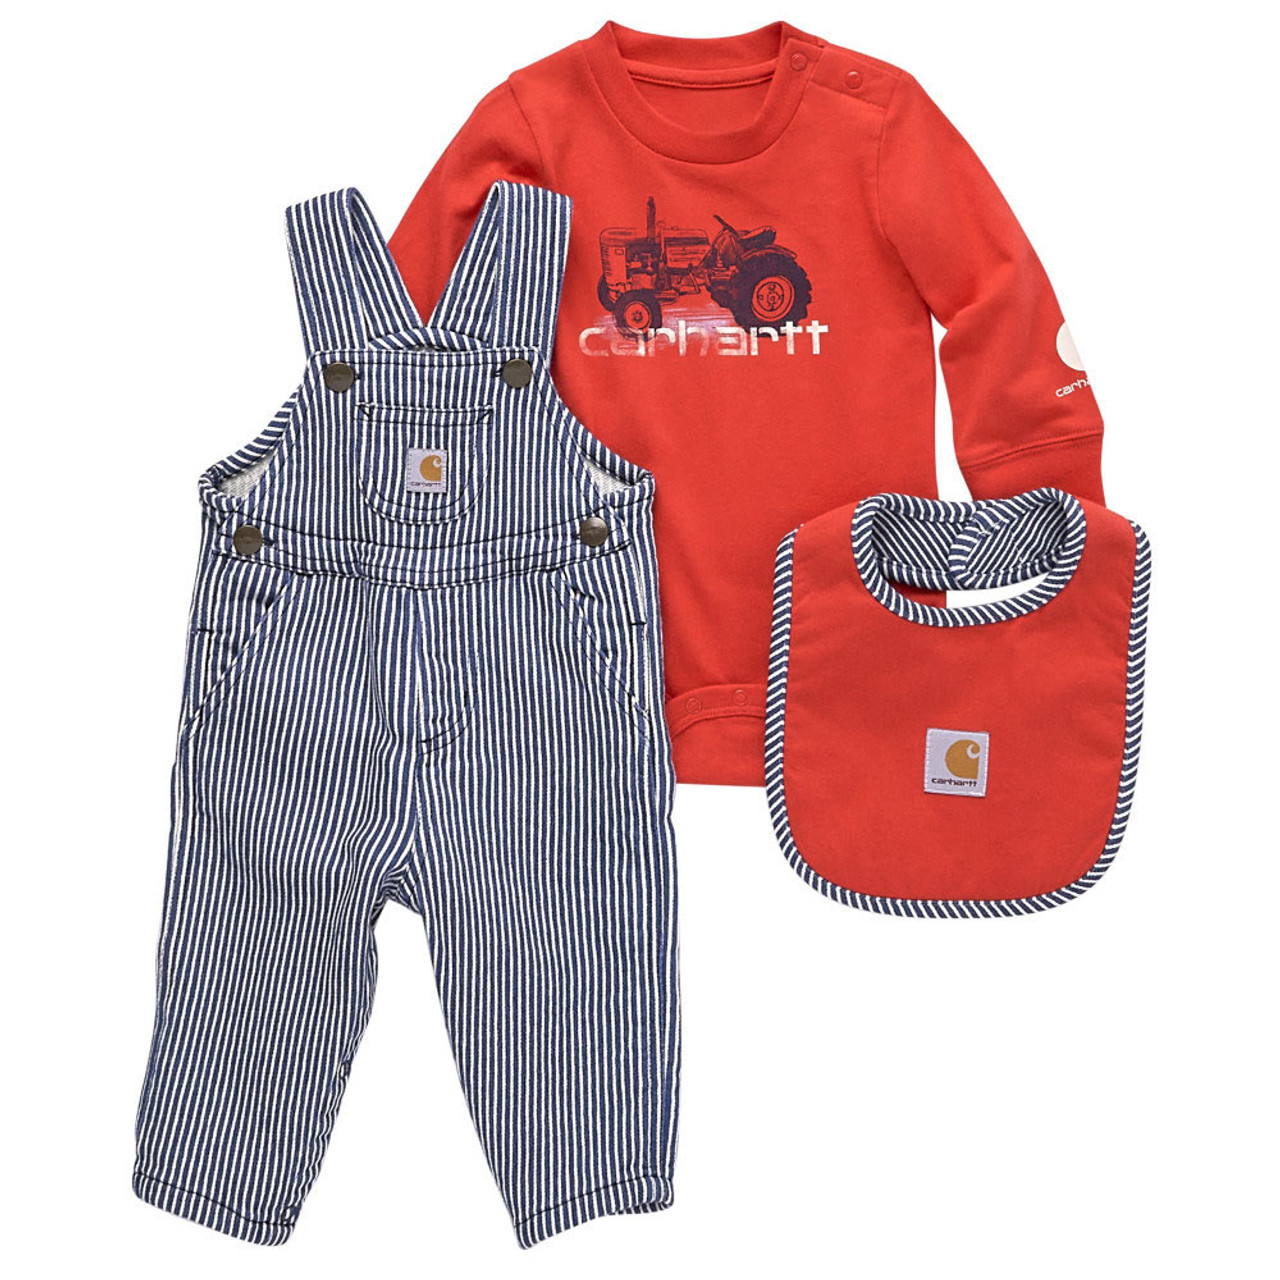 Carhartt Boy's Infant/Toddler Fishing Vest Graphic Onesie